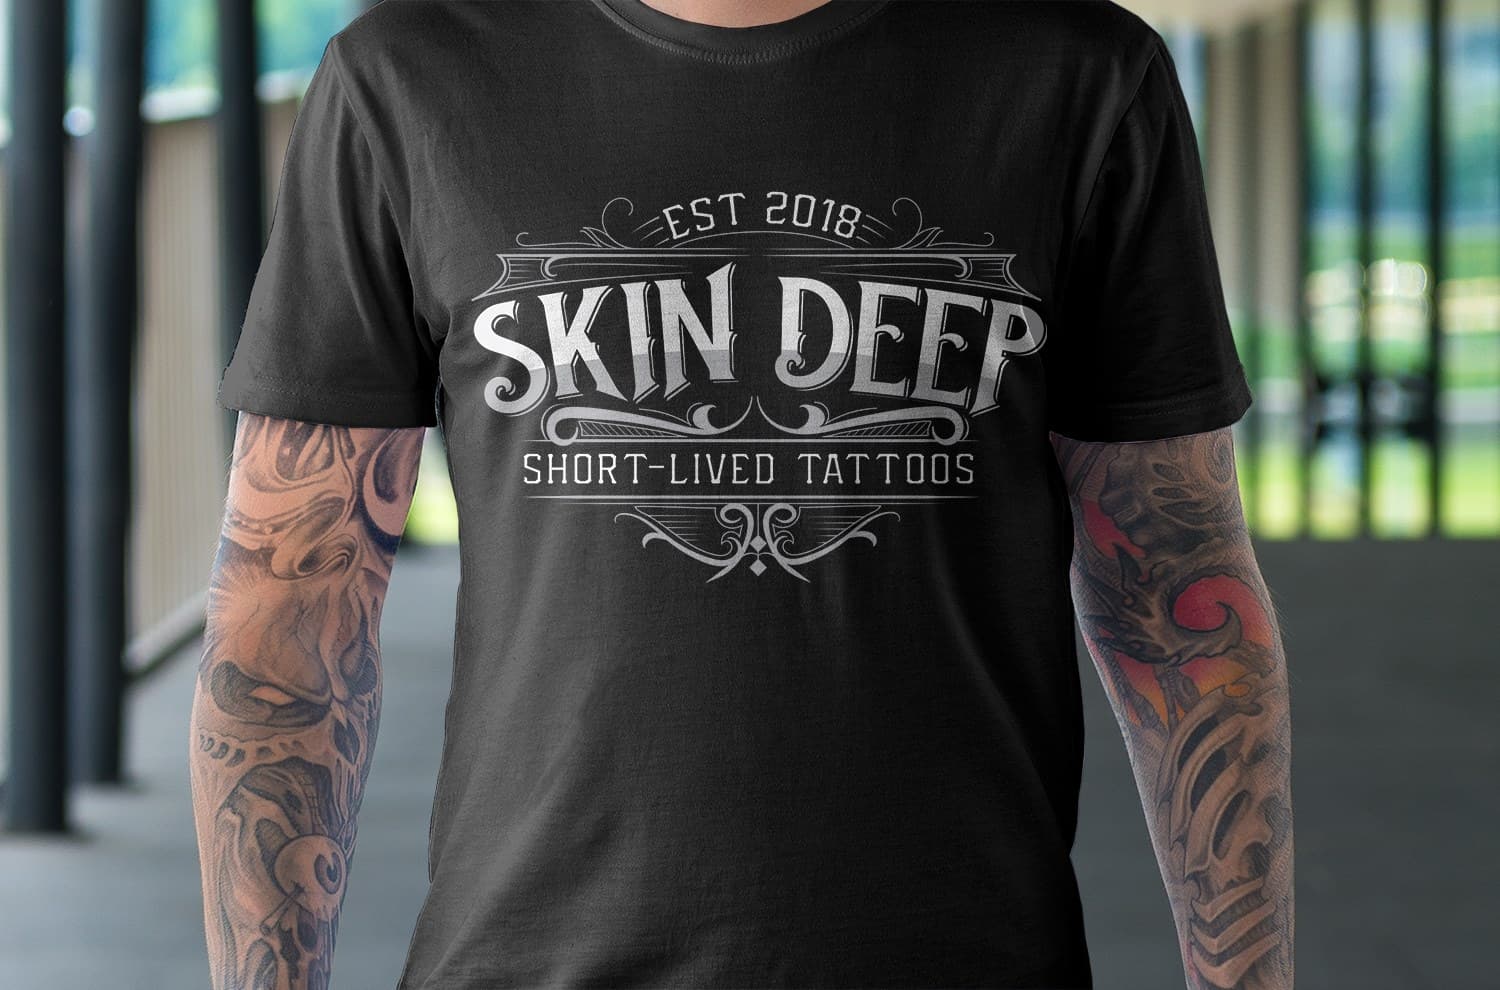 Tattoo design t-shirt by Sam Stoke.